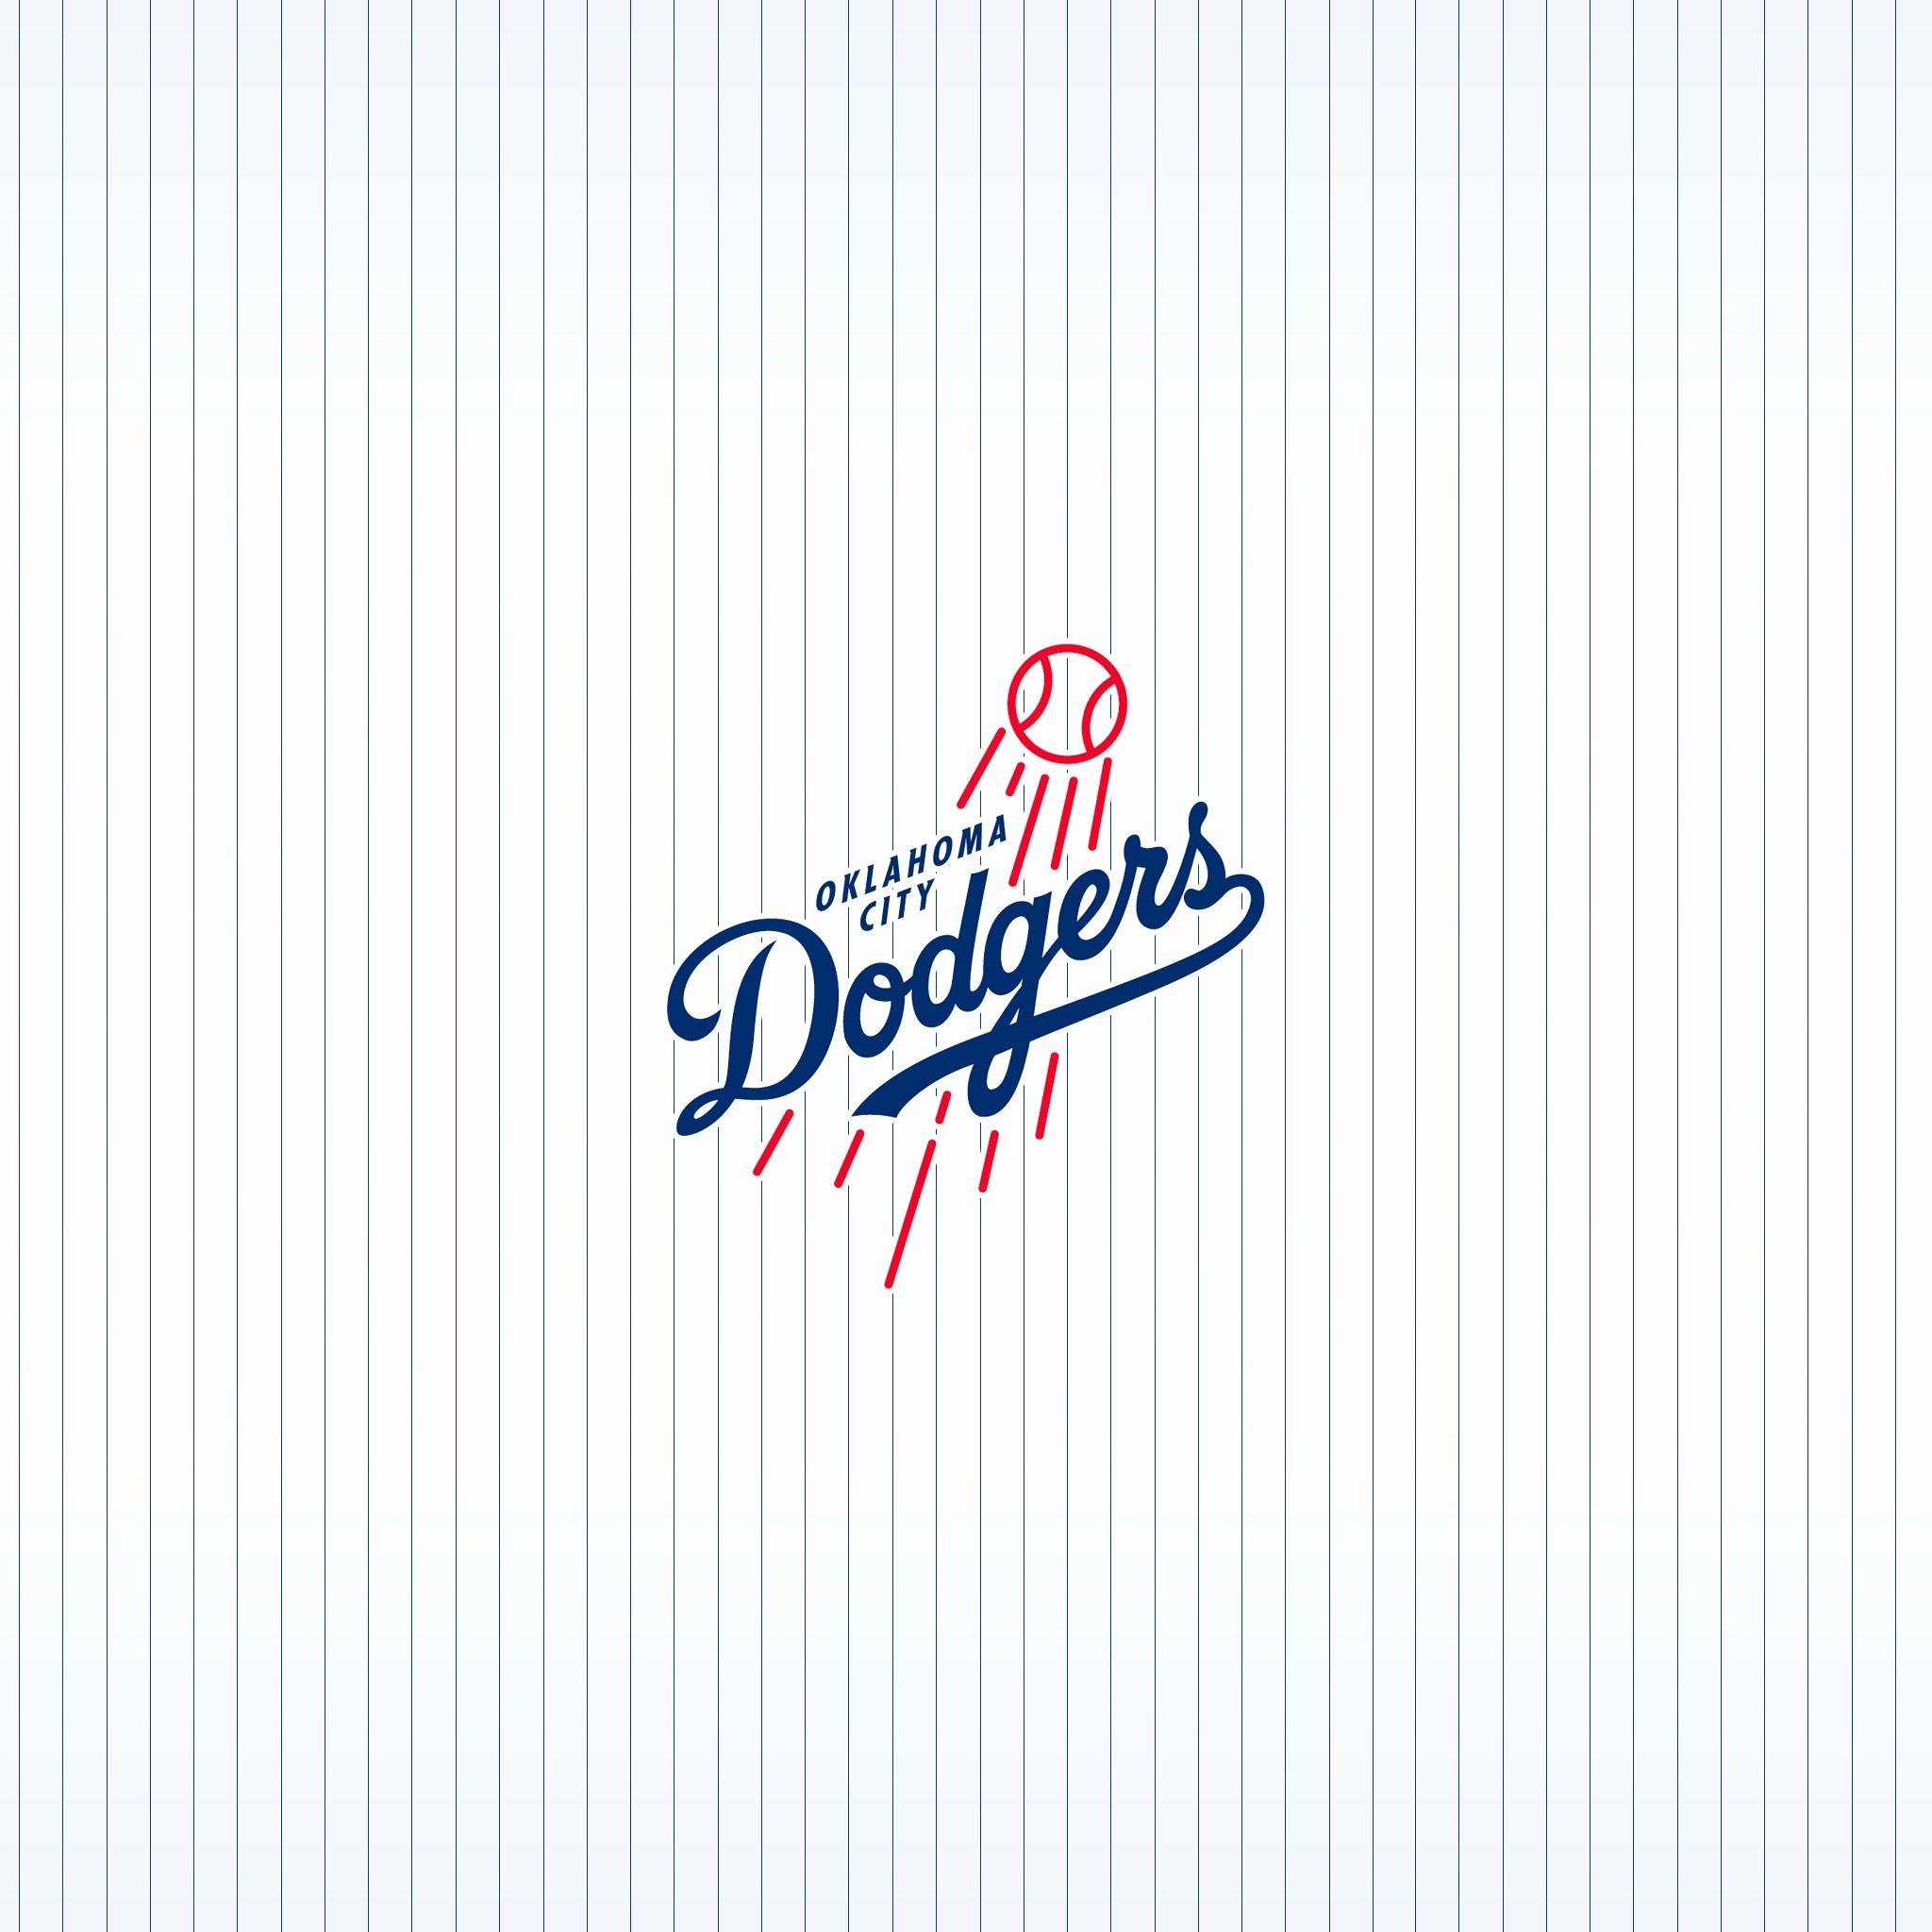 Los Angeles Dodgers on X: Walker. #WallpaperWednesday